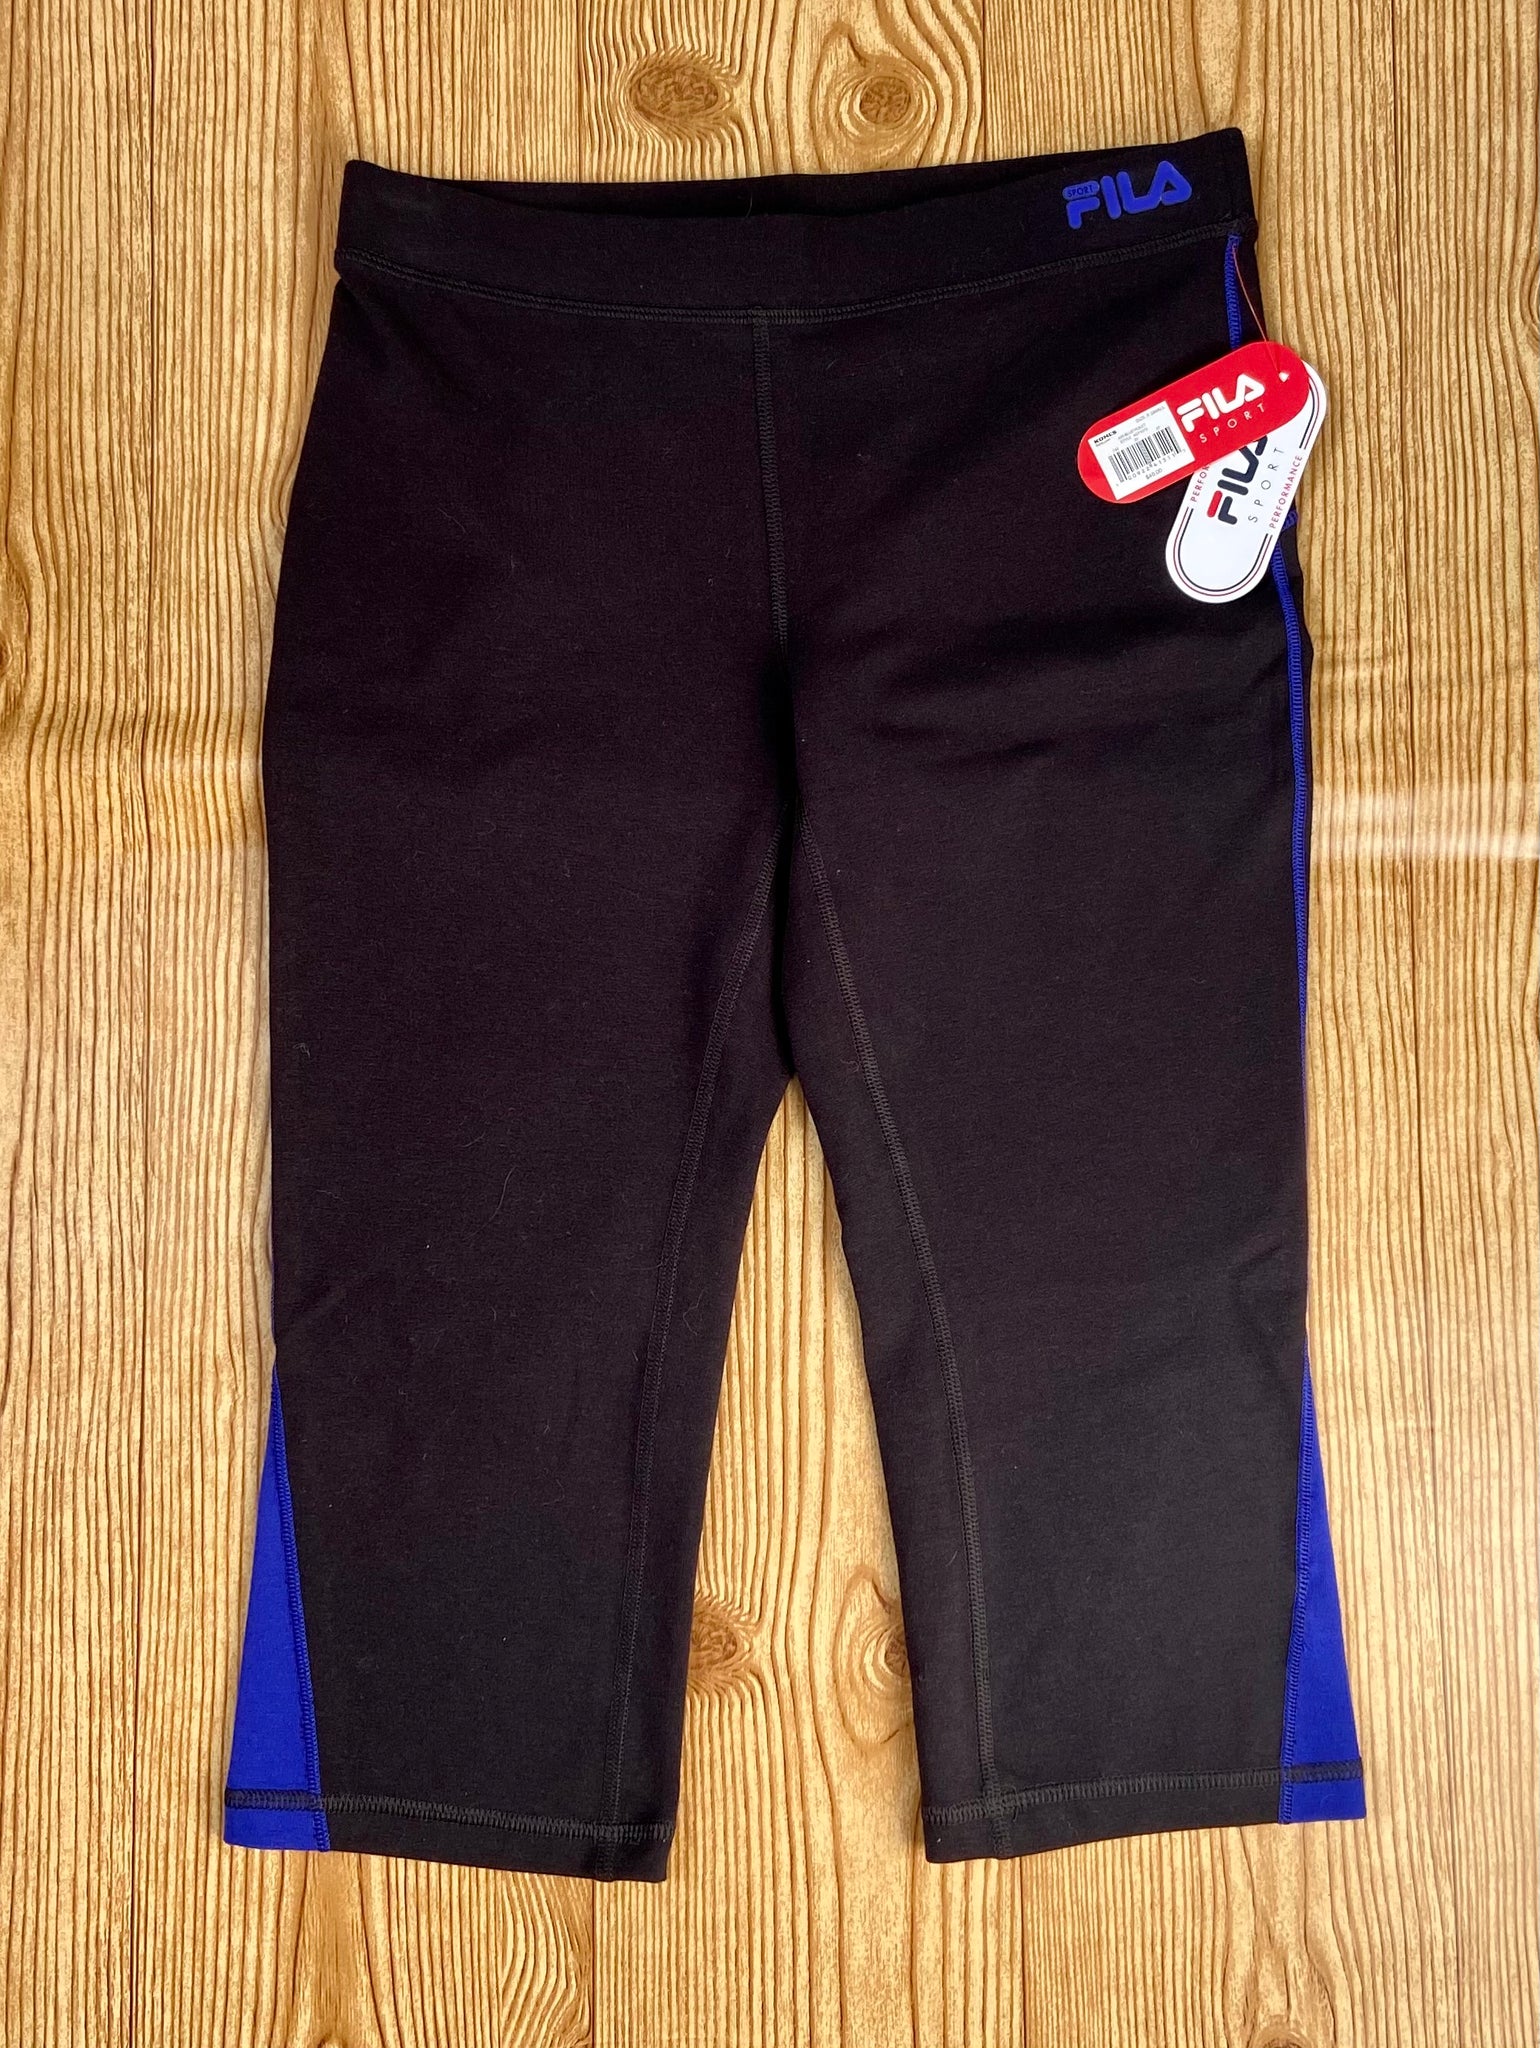 NWT Fila Sport Cropped Athletic pants/shorts Sz XS